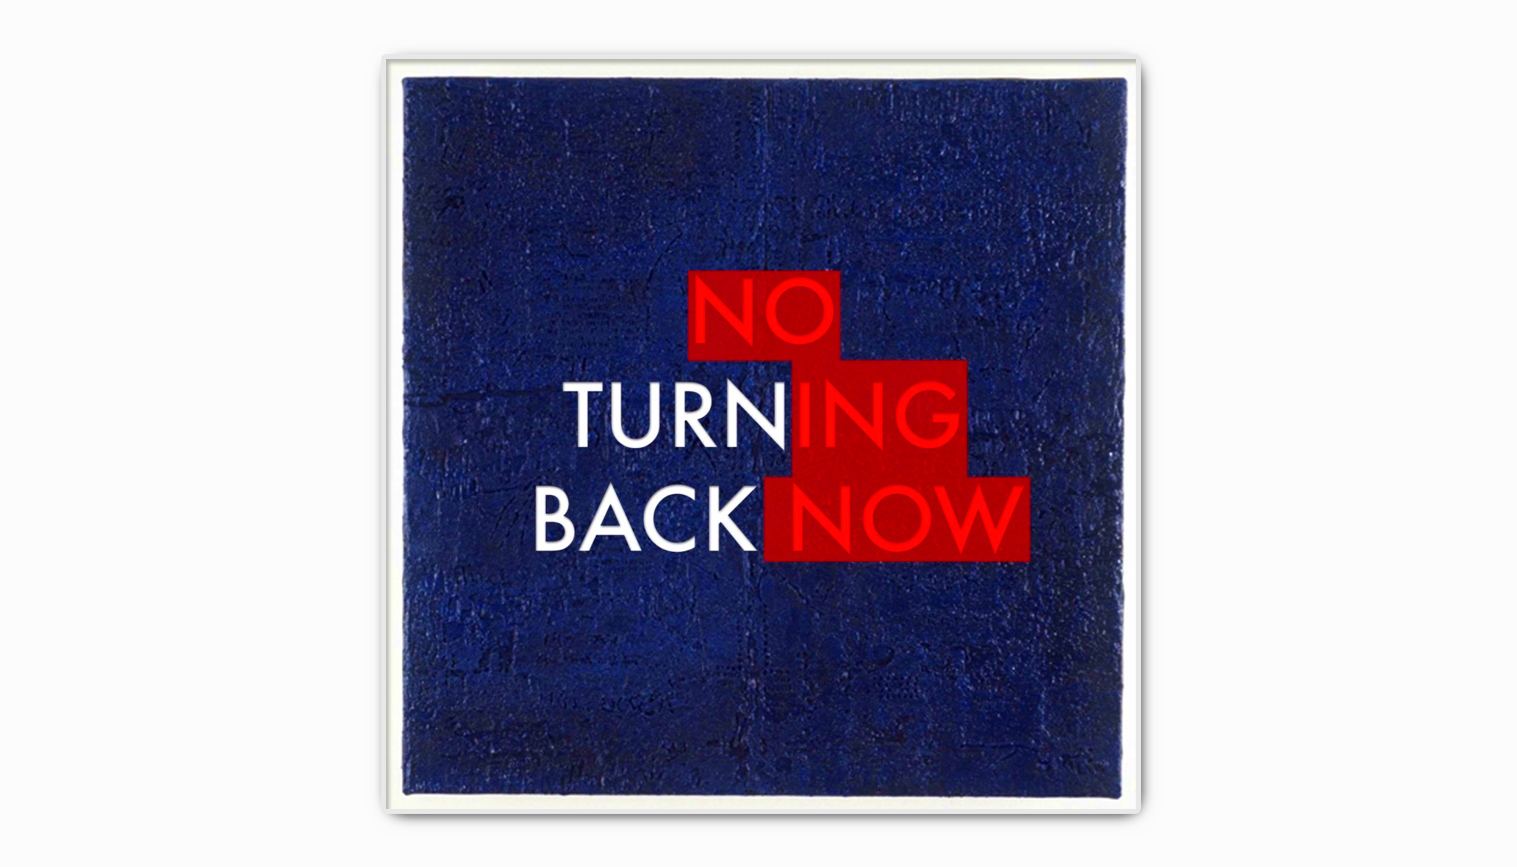  Turn Back, acrylic on wood 4'x4' 2015 